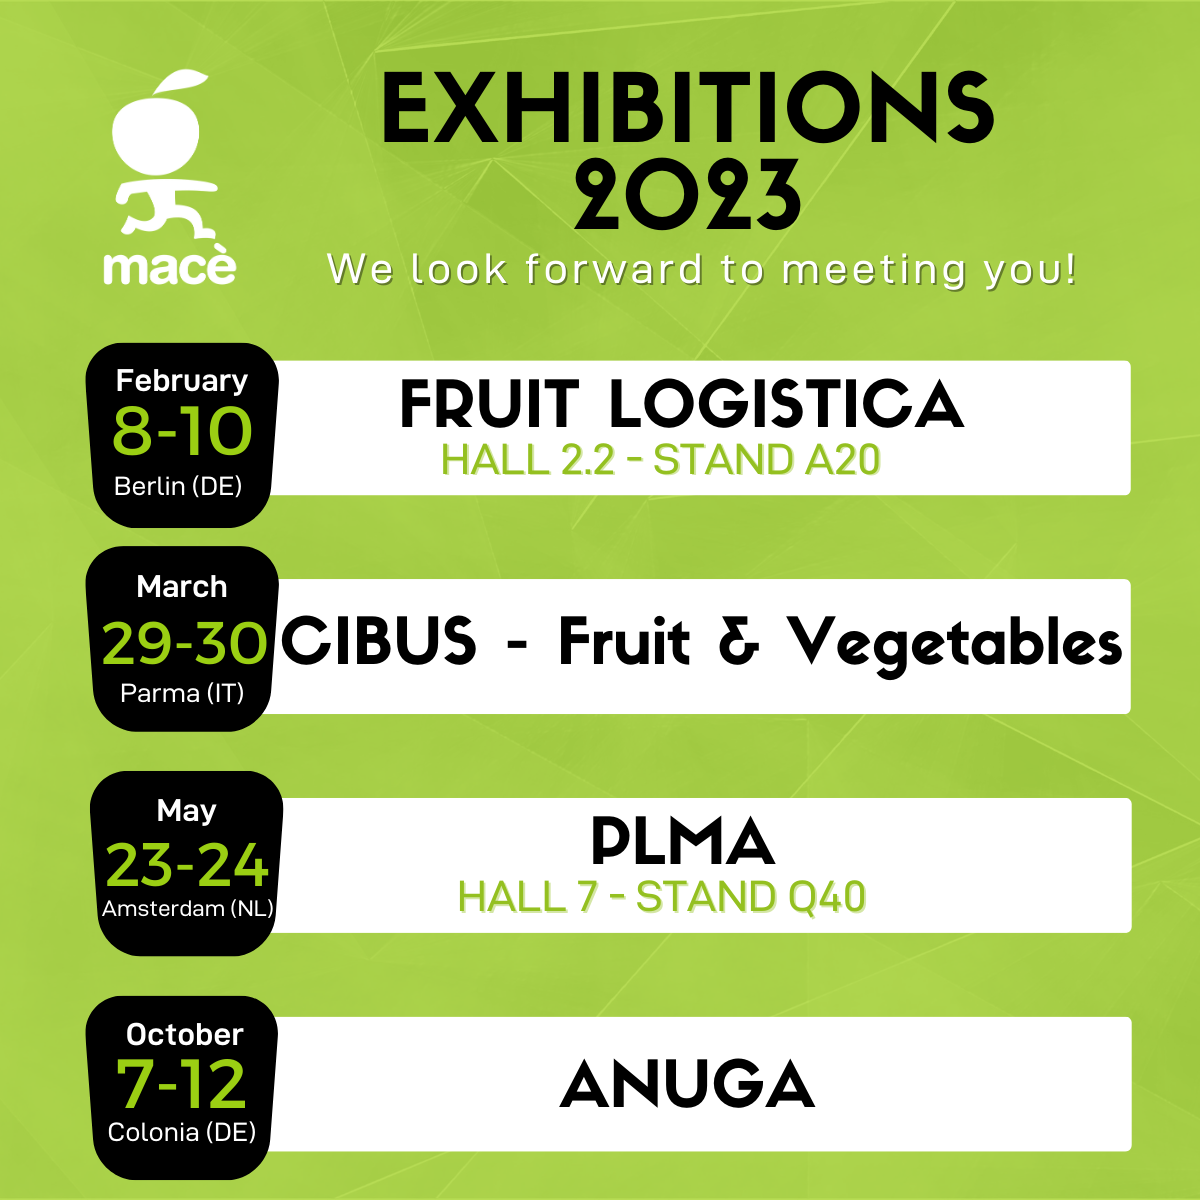 calendario fiere 2023 a cui Macè partecipa: fruit logistica 8-10 febbraio,  Cibus 29-30 marzo, PLMA 23-24 maggio, ANUGA 7-12 ottobre